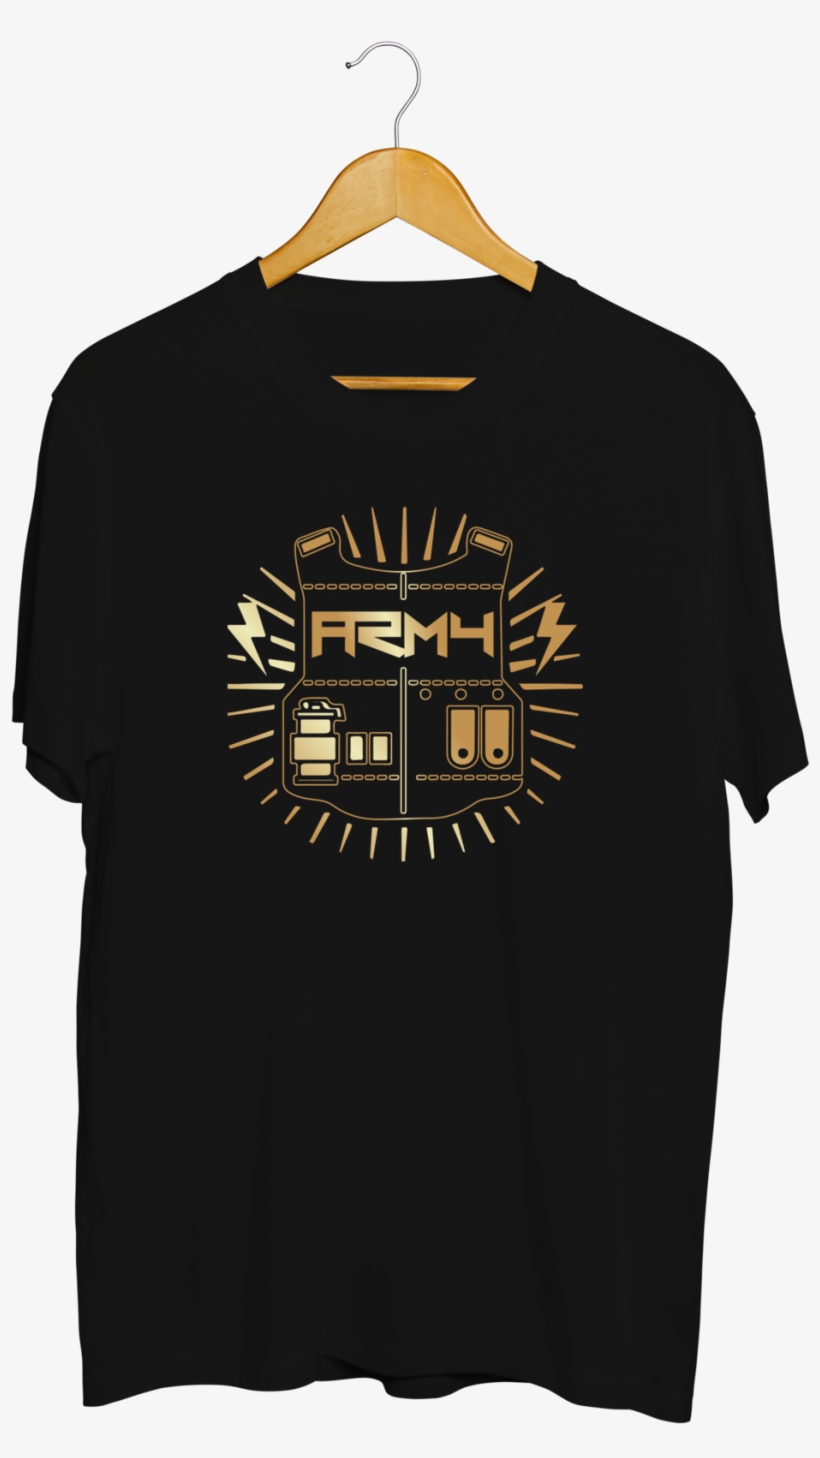 Bts Army Gold Shield Black T-shirt - Green Day Tour 2017 T-shirt Revolution Radio Tour Dates, transparent png #1628491